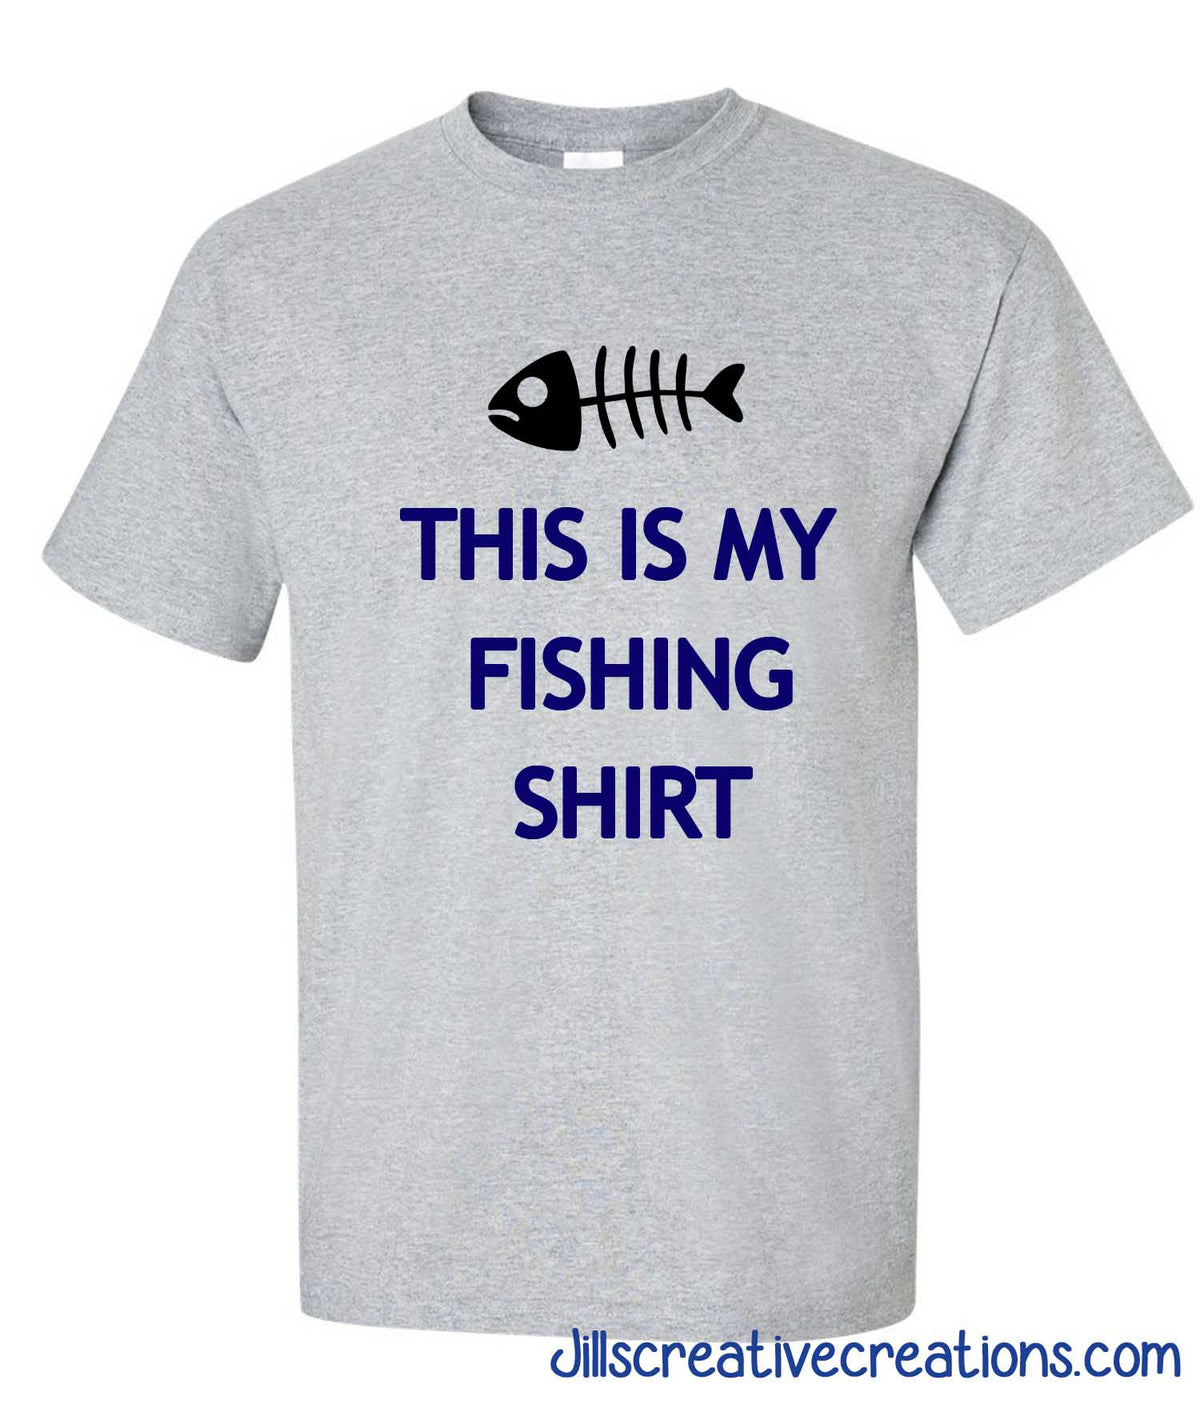 This is my Fishing Shirt